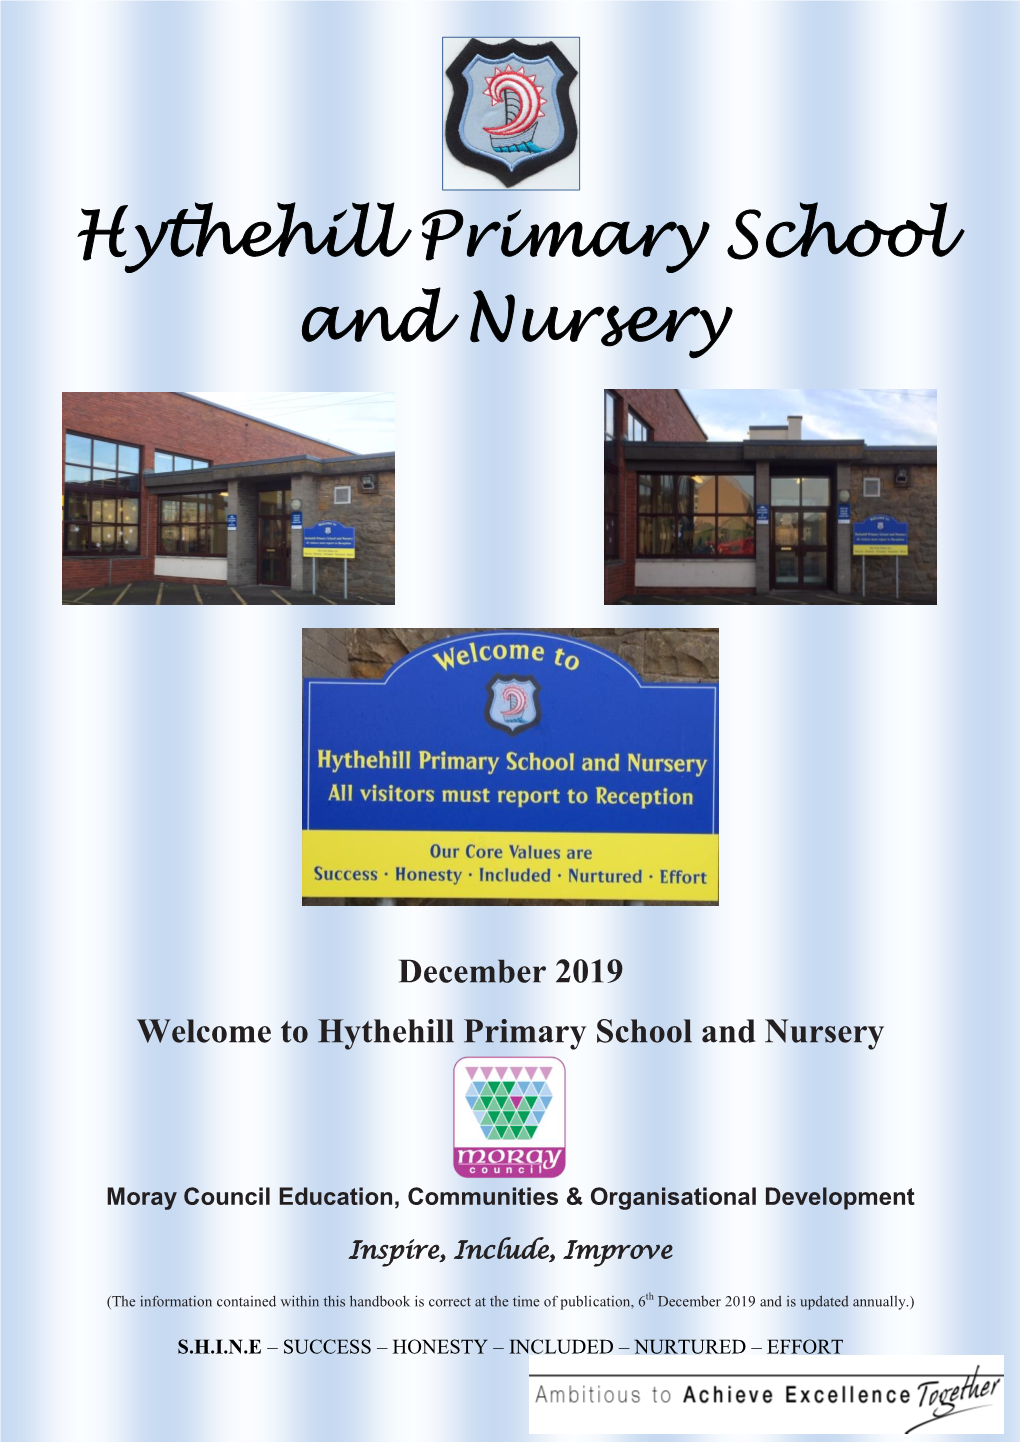 Hythehill Primary School and Nursery